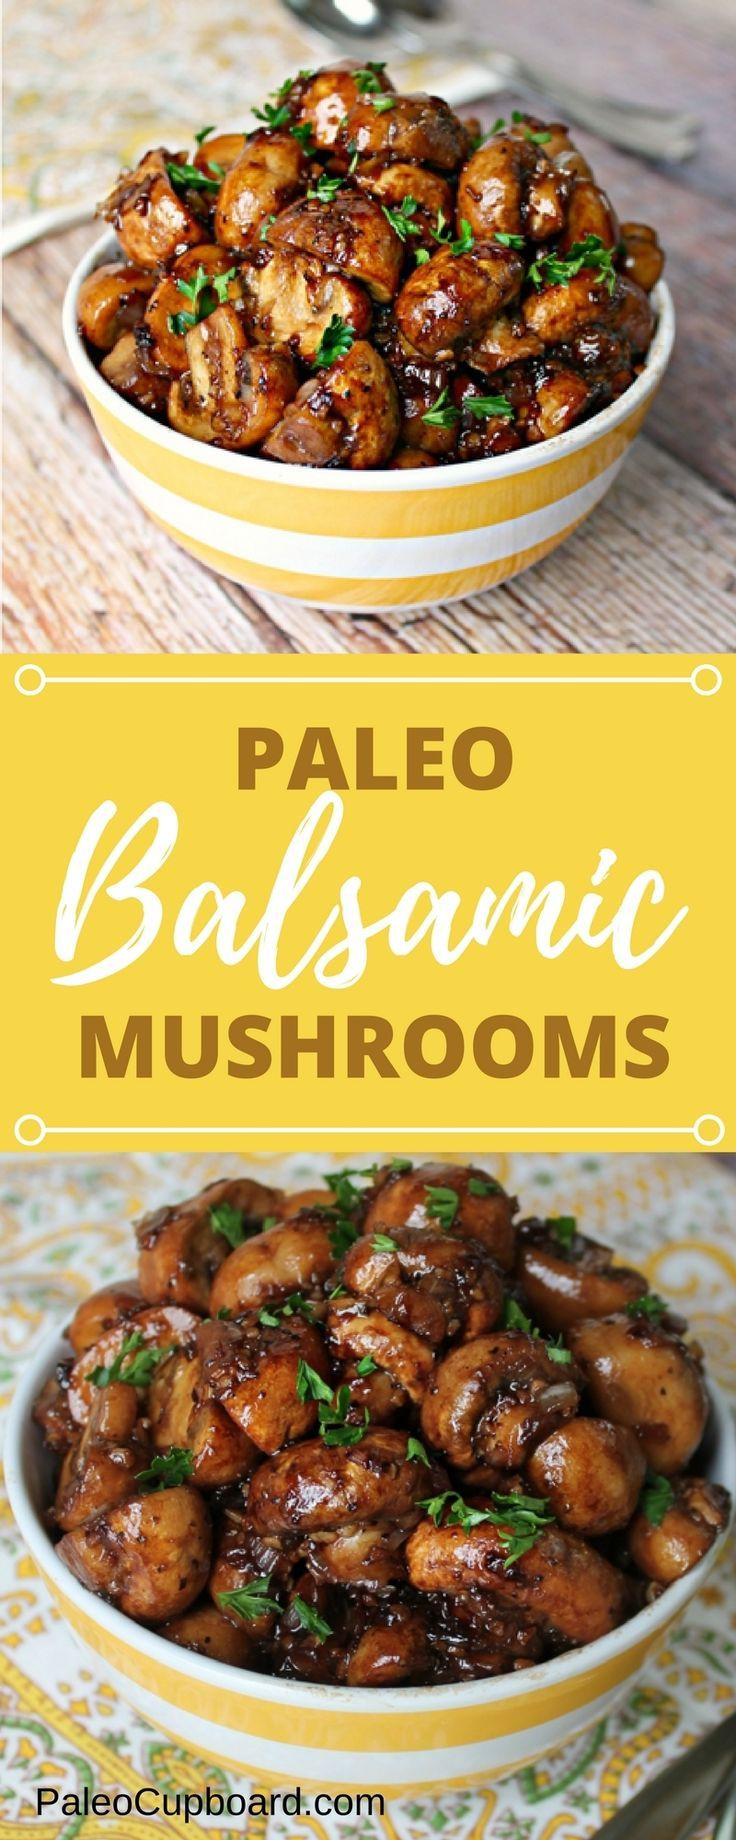 Healthy Mushroom Side Dish
 Best 20 Healthy Mushroom Recipes ideas on Pinterest